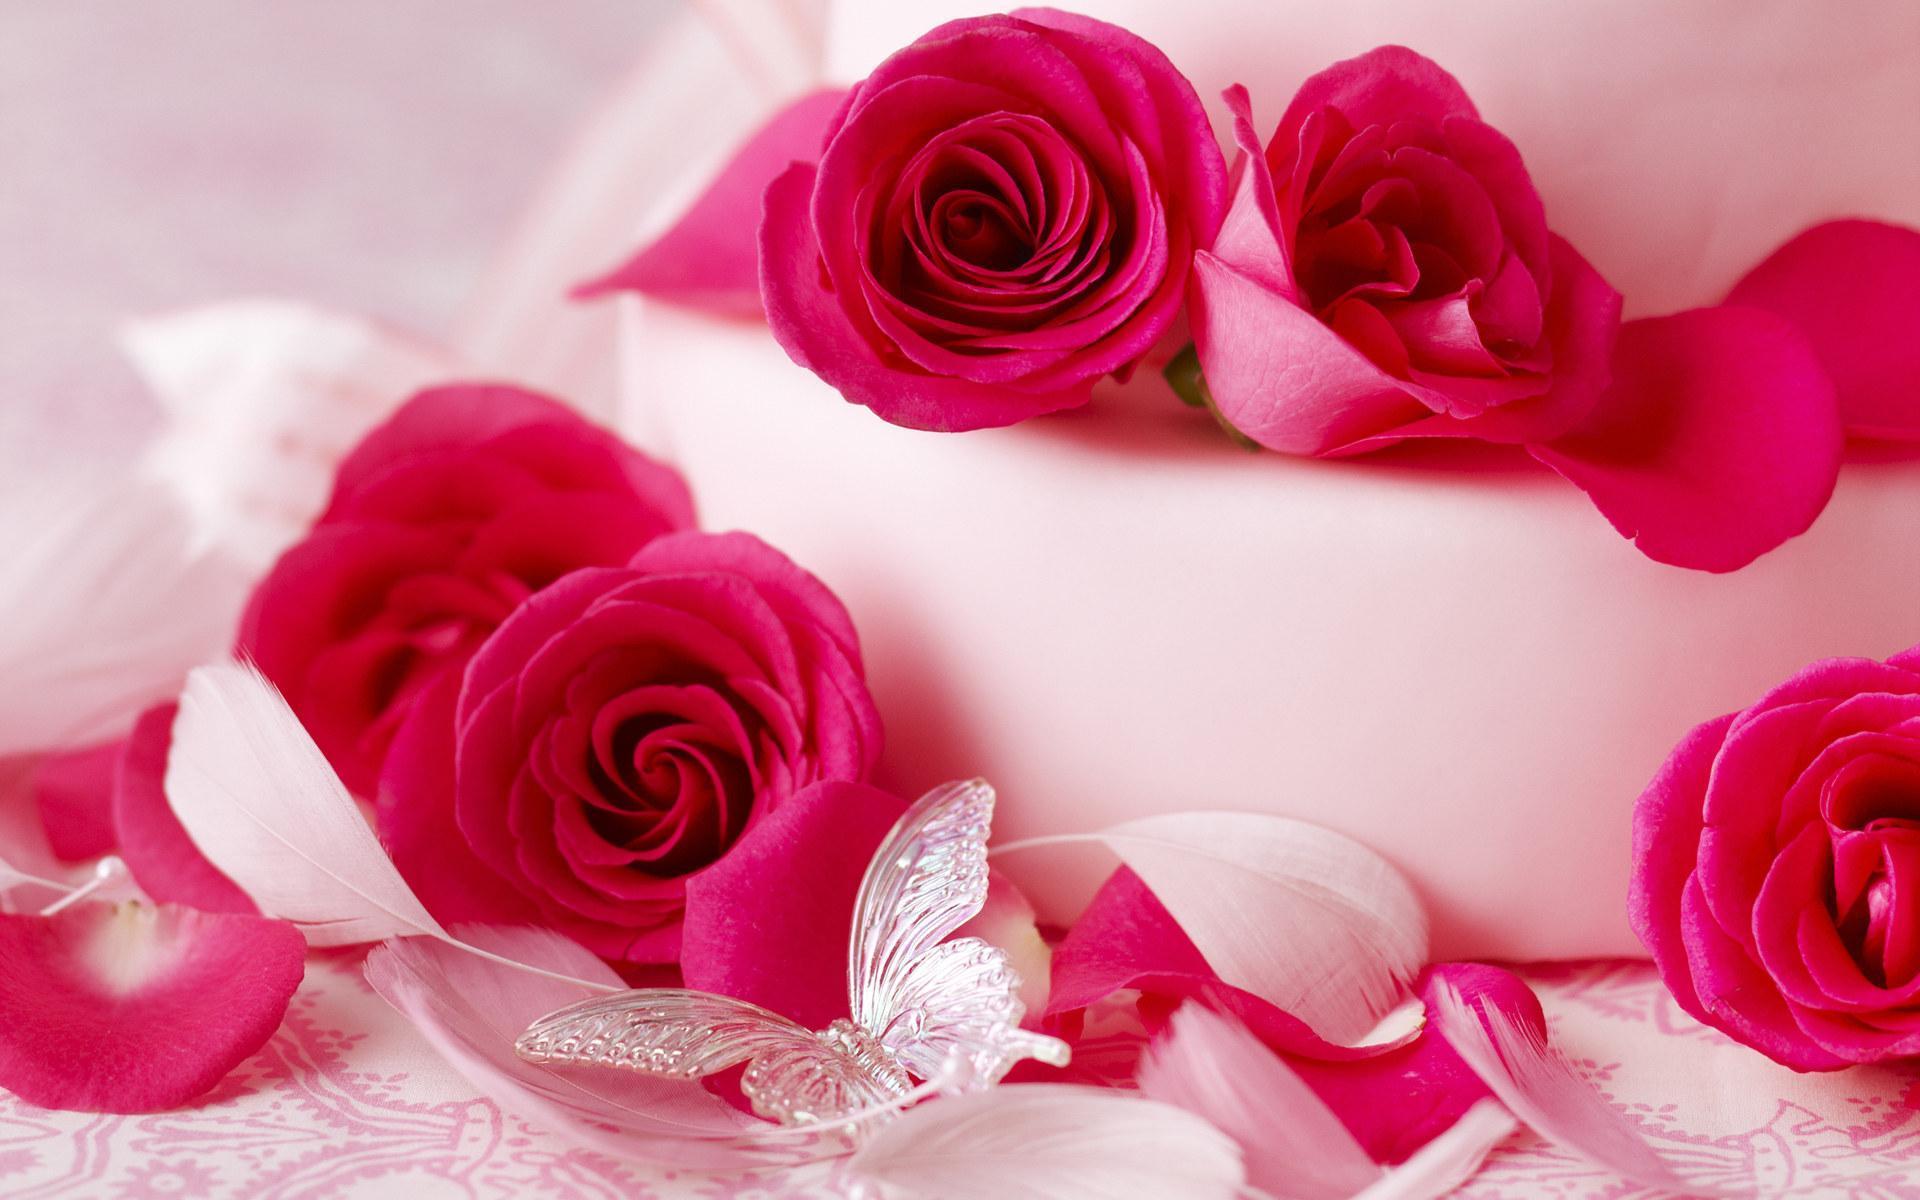 Romantic Roses - Roses Wallpaper (13966416) - Fanpop